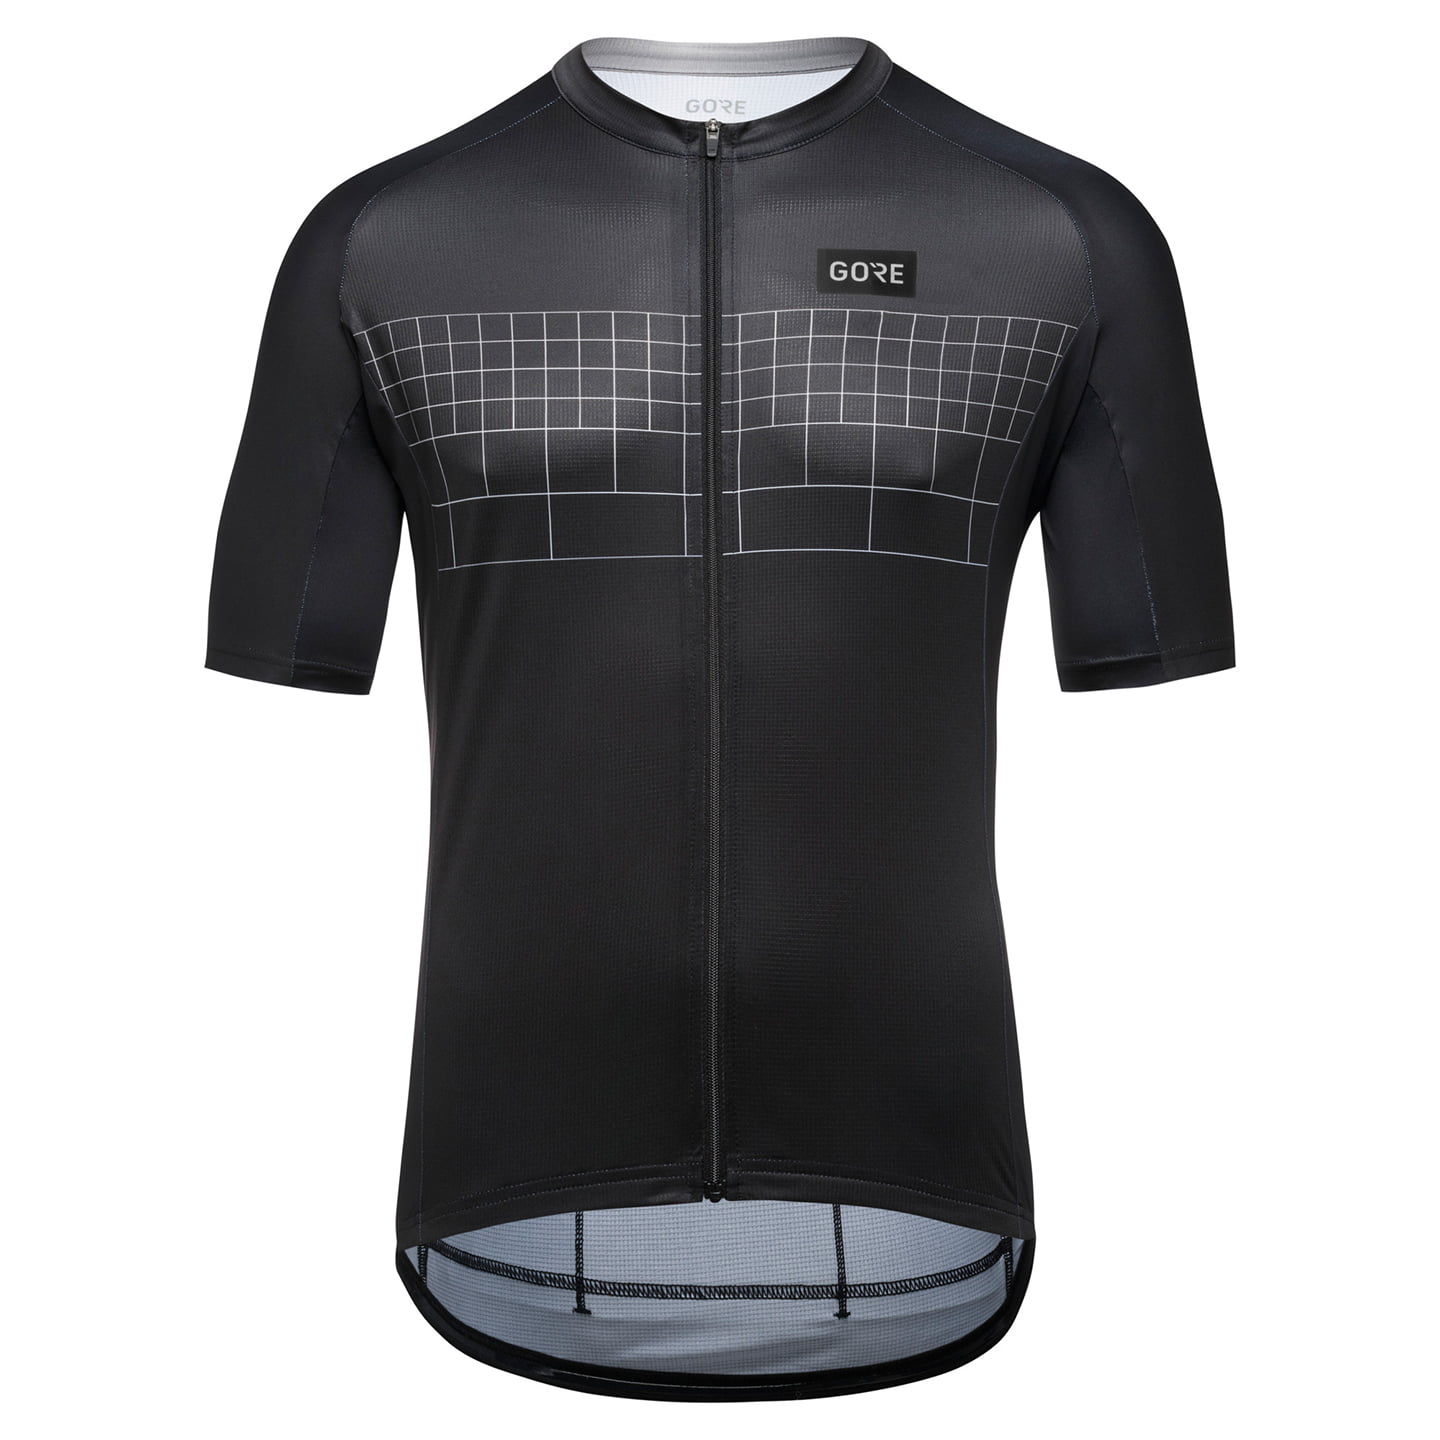 GORE WEAR Grid Fade 2.0 Short Sleeve Jersey Short Sleeve Jersey, for men, size 2XL, Cycling jersey, Cycle clothing